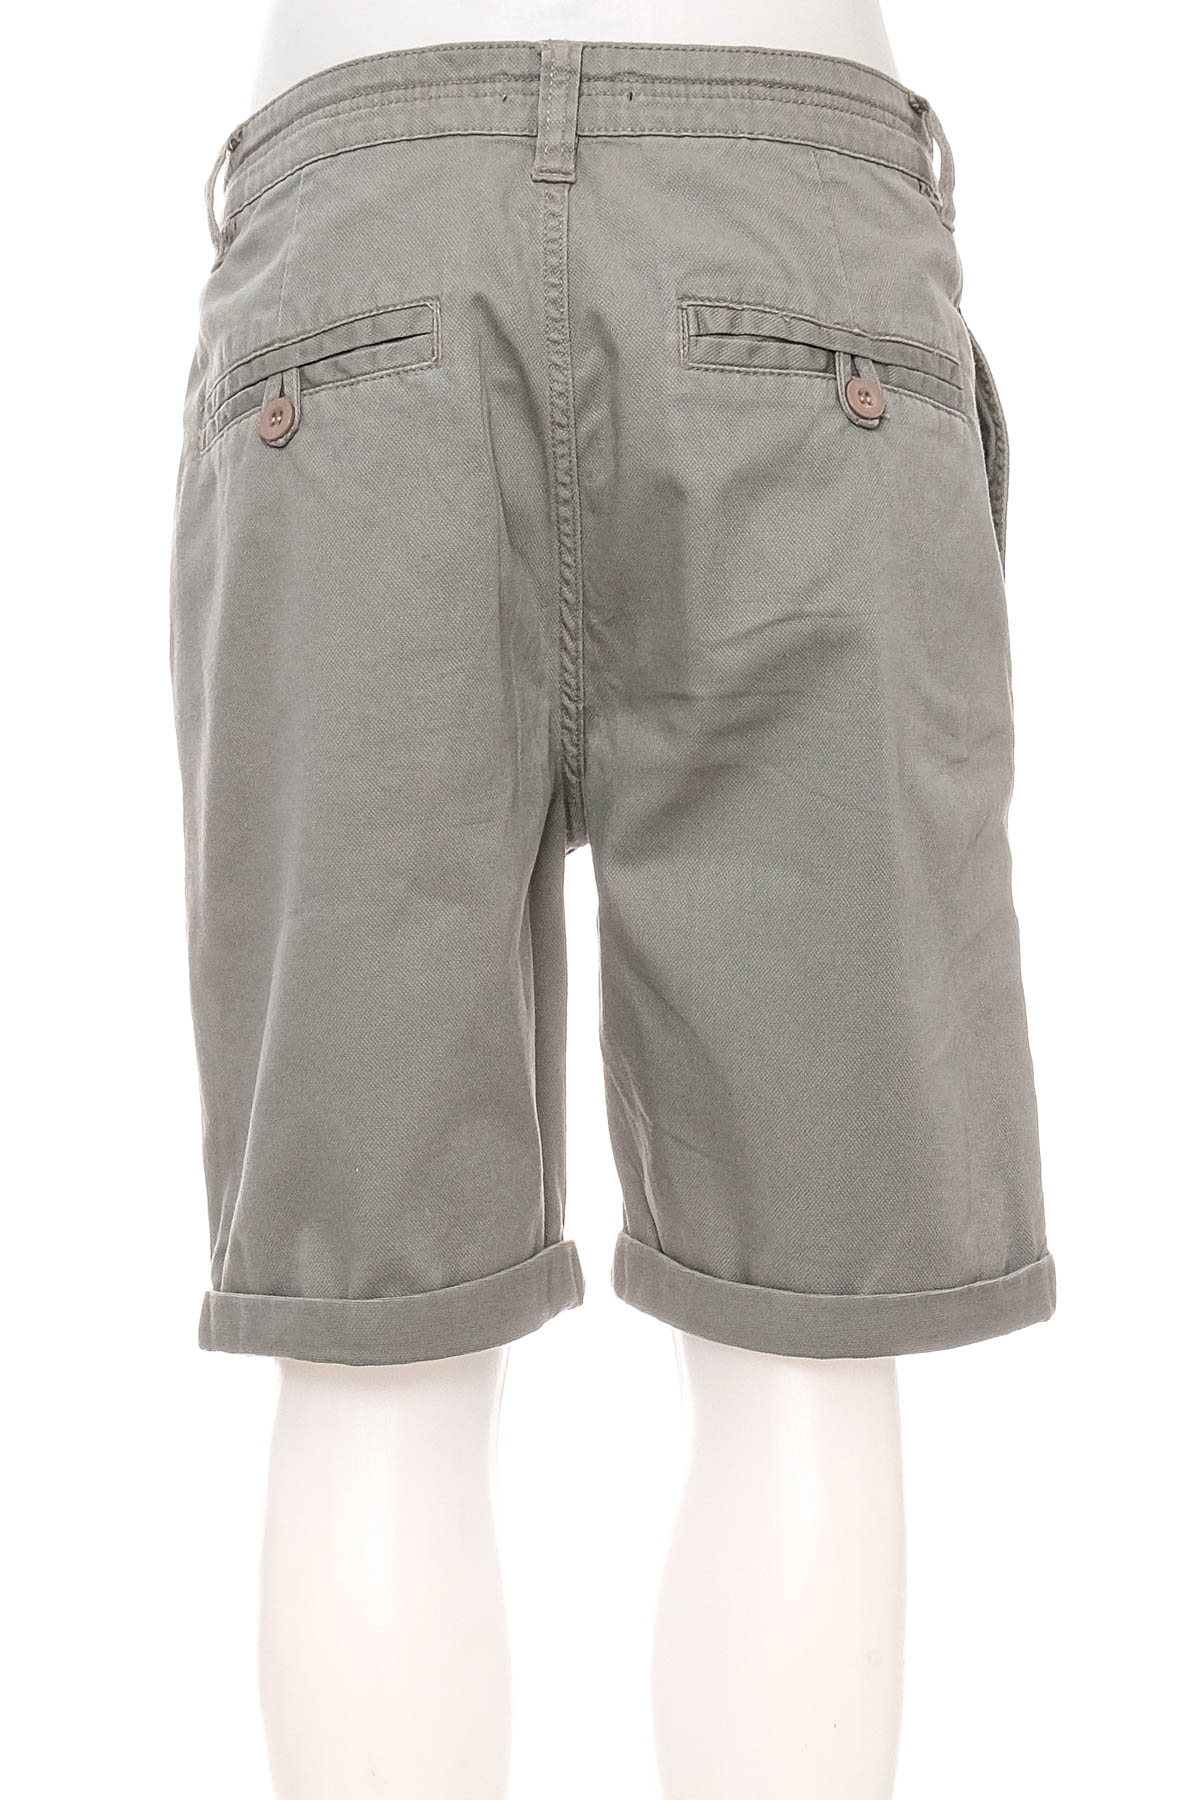 Men's shorts - SUBLEVEL - 1